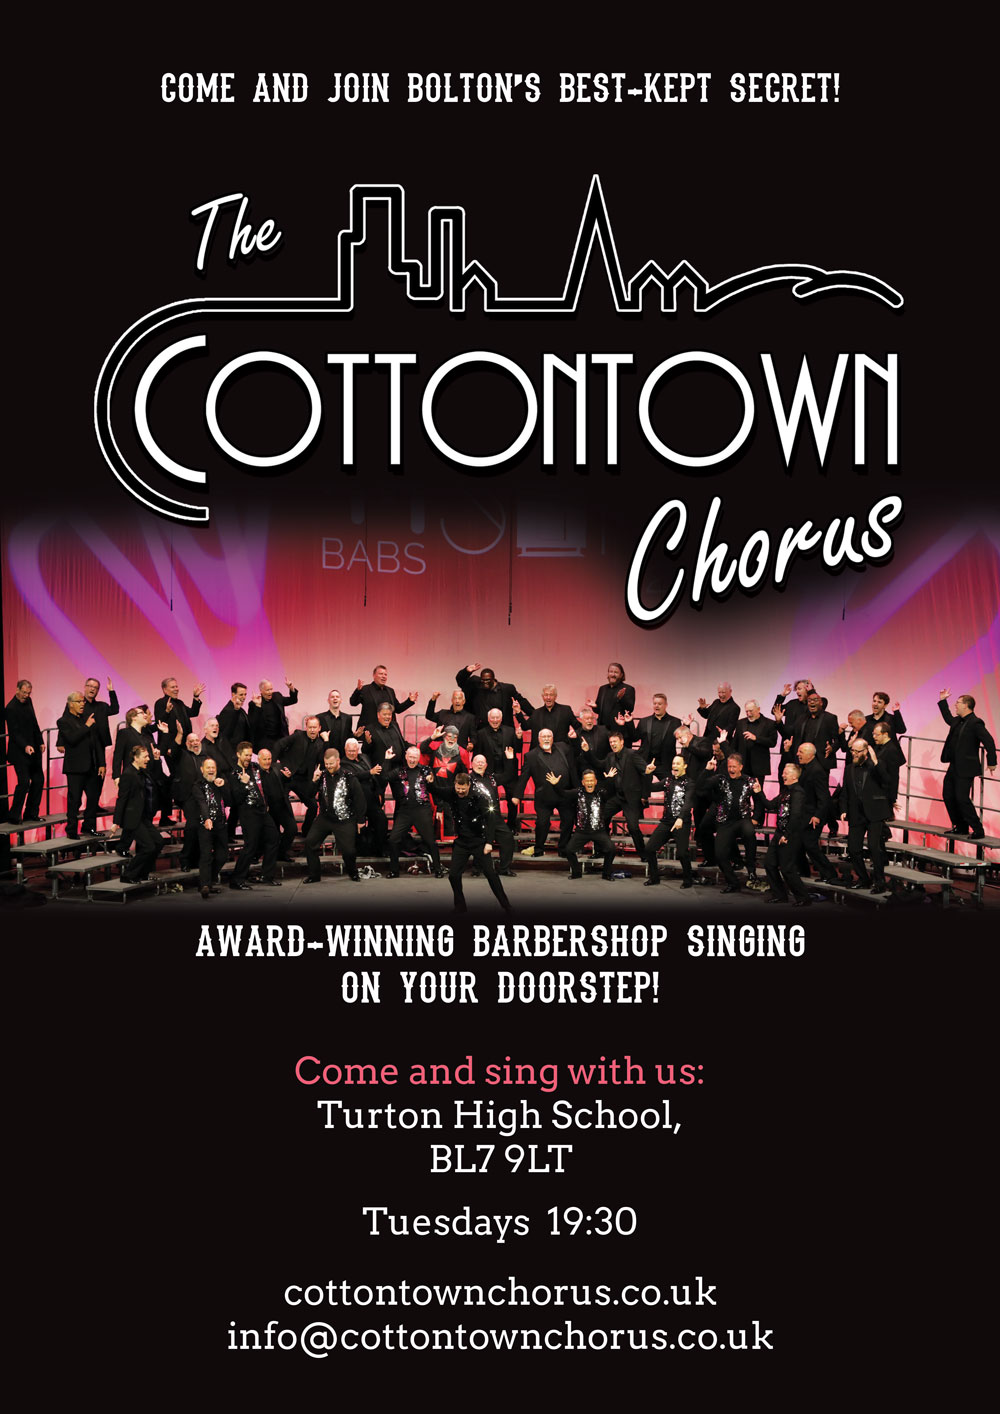 Come and join Bolton's best-kept secret - The Cottontown Chorus!